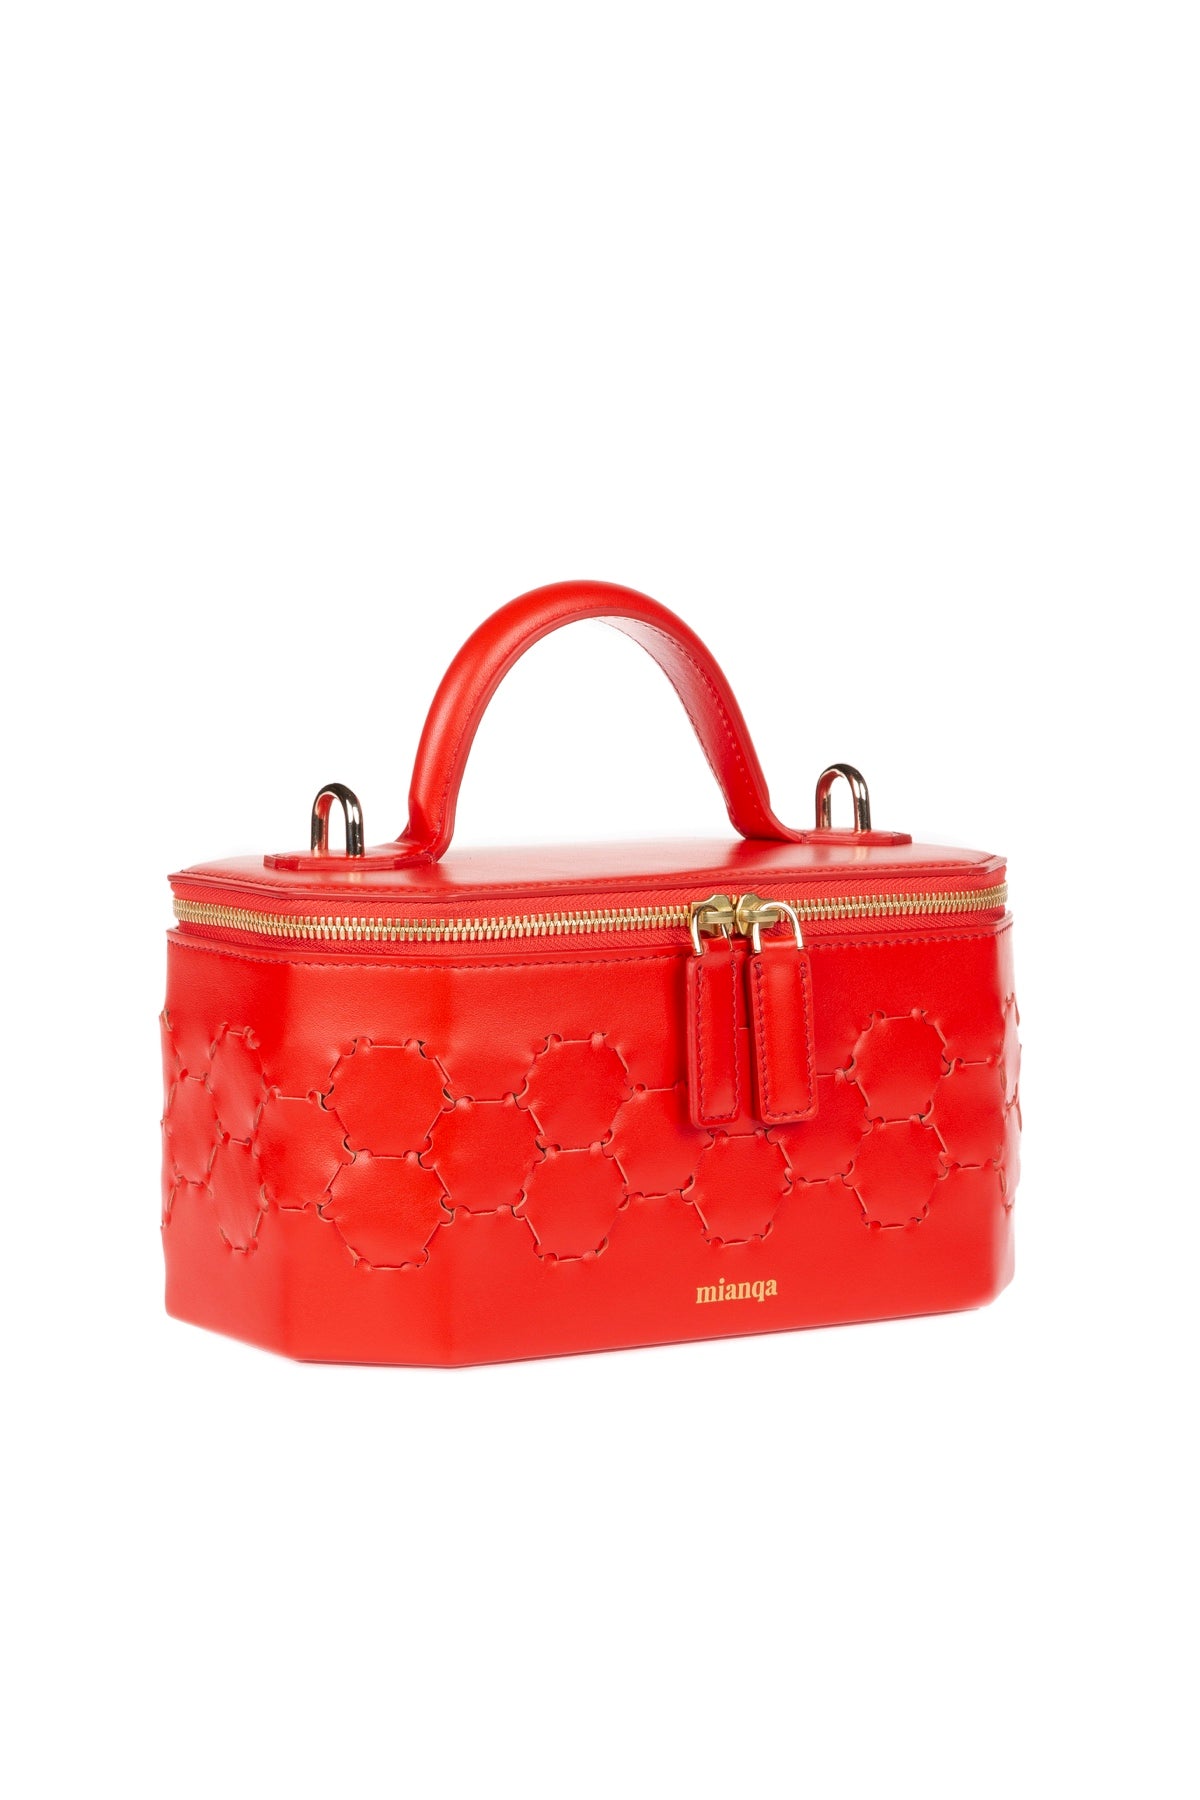 Safiye Designer Jewellery Bag Red